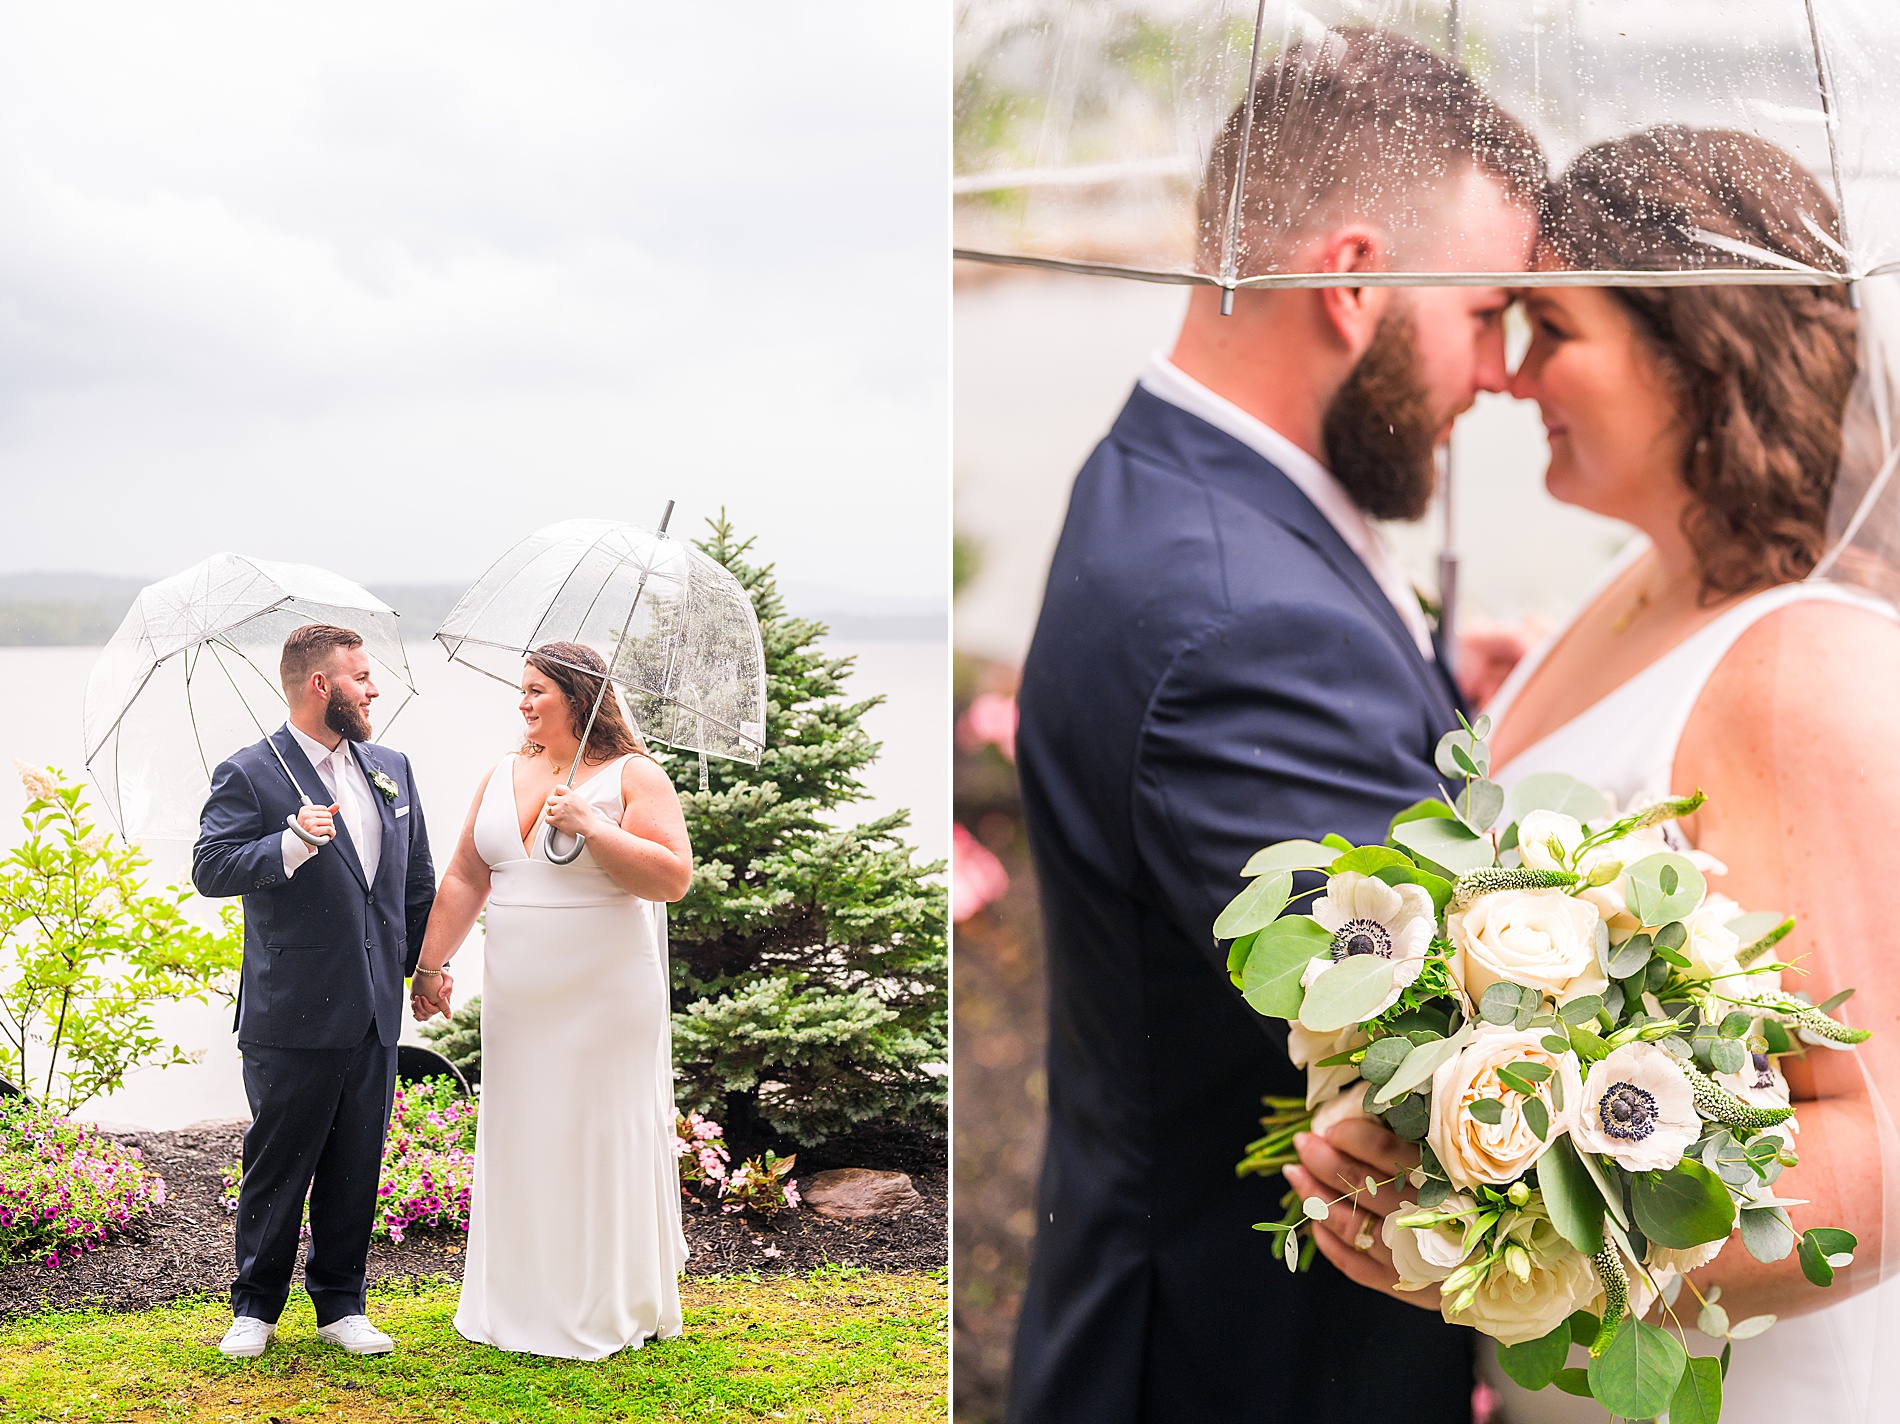 romantic wedding portraits in the rain by New Hampshire wedding photographer Allison Clarke Photography